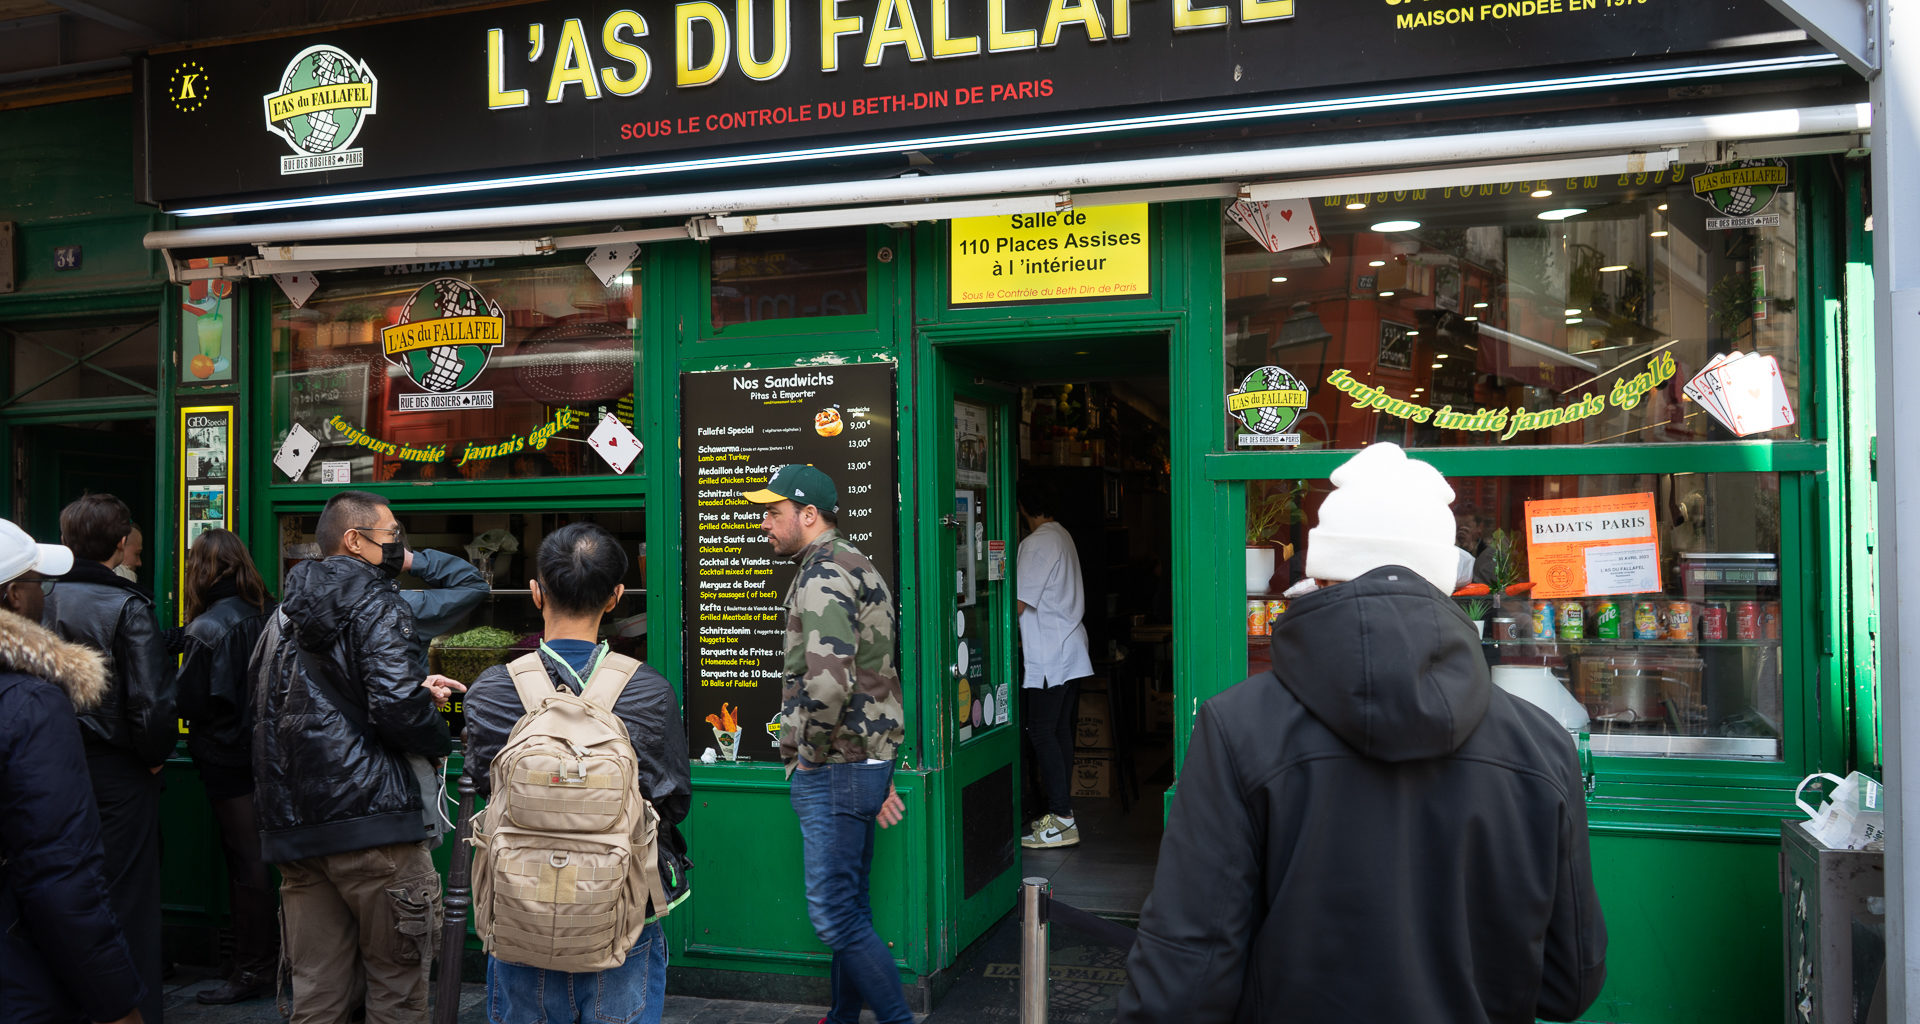 The Best falafel in Paris guide